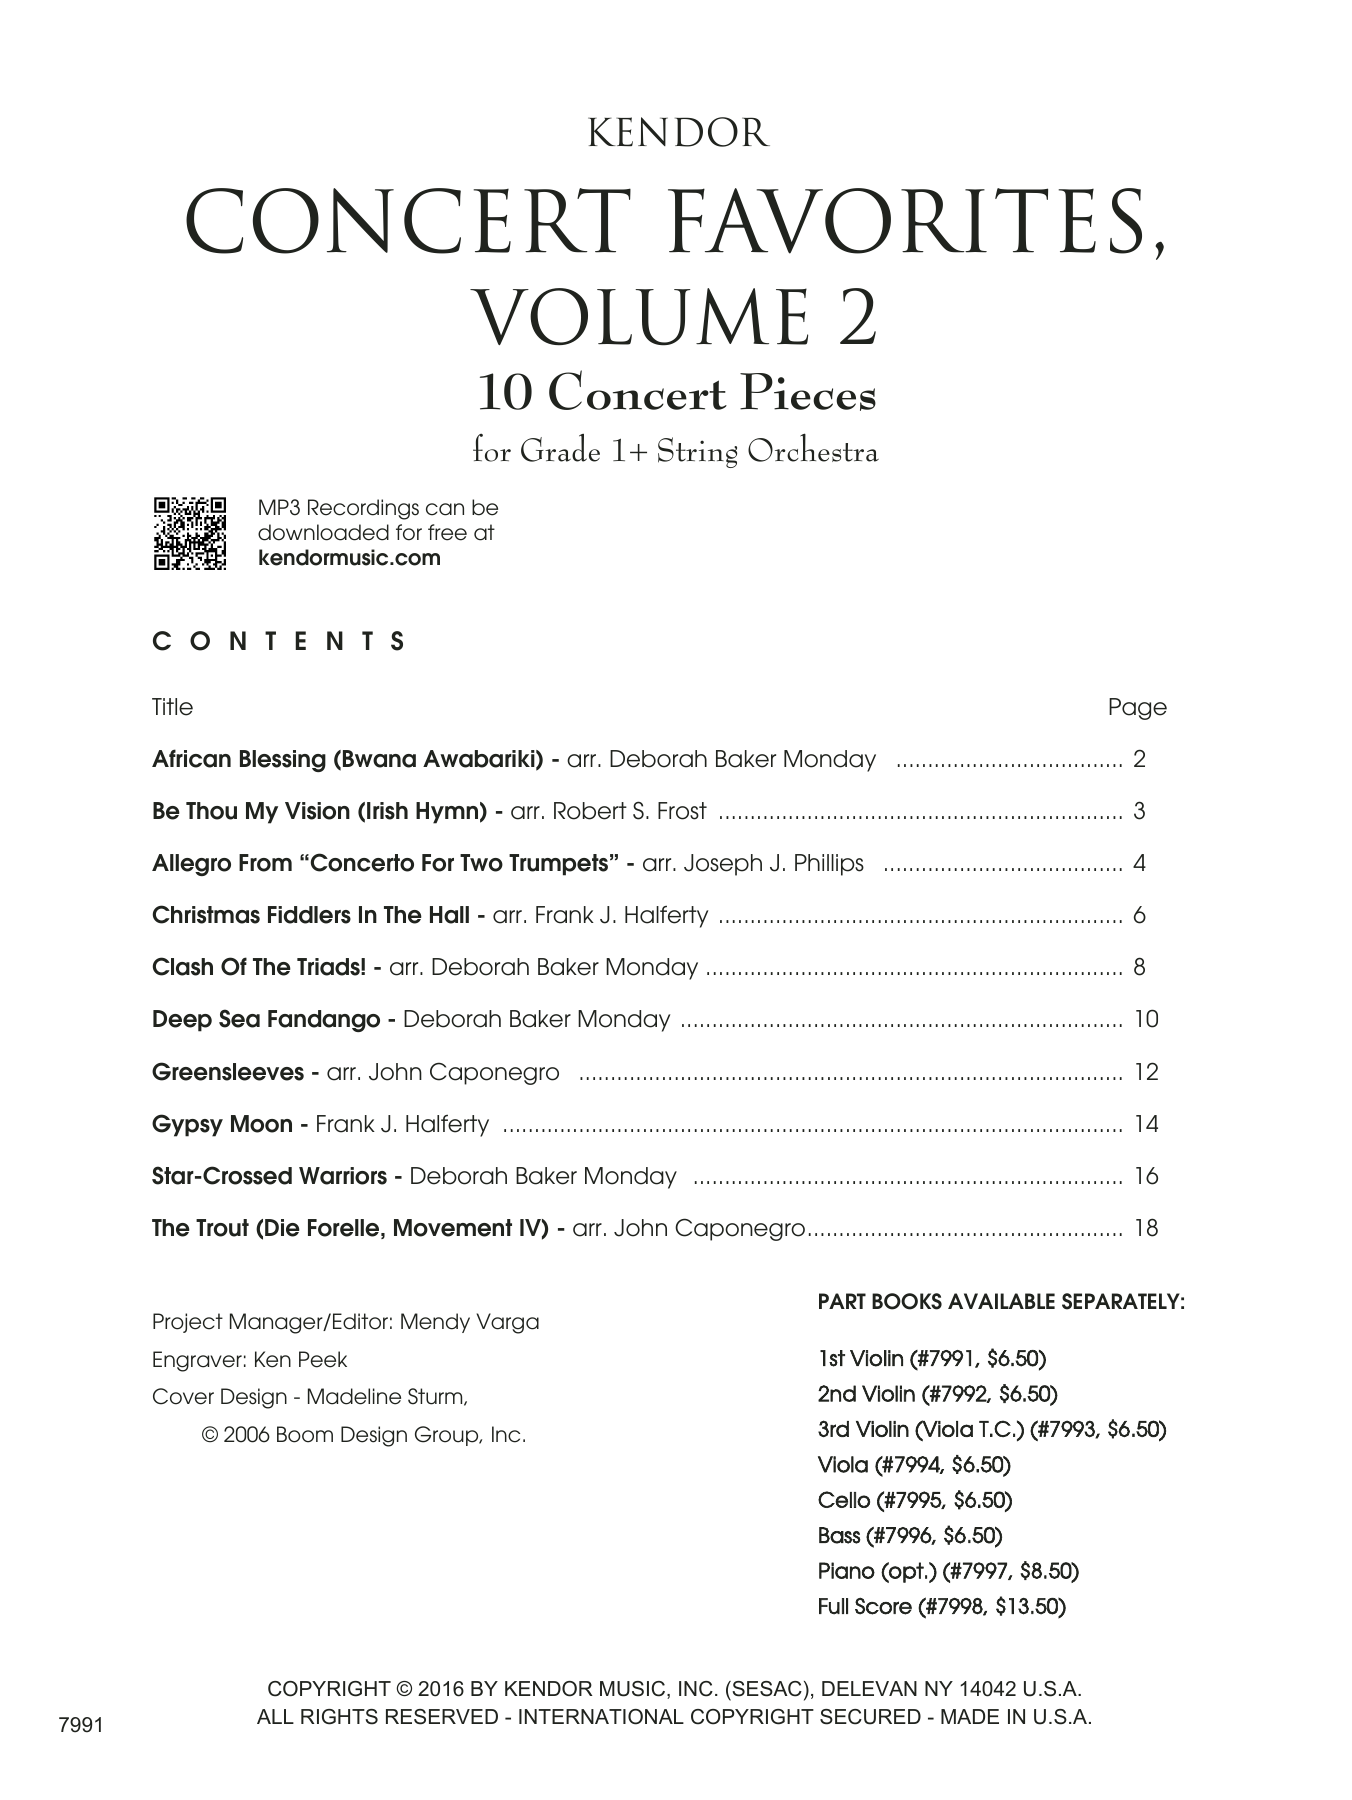 Download Various Kendor Concert Favorites, Volume 2 - 1s Sheet Music